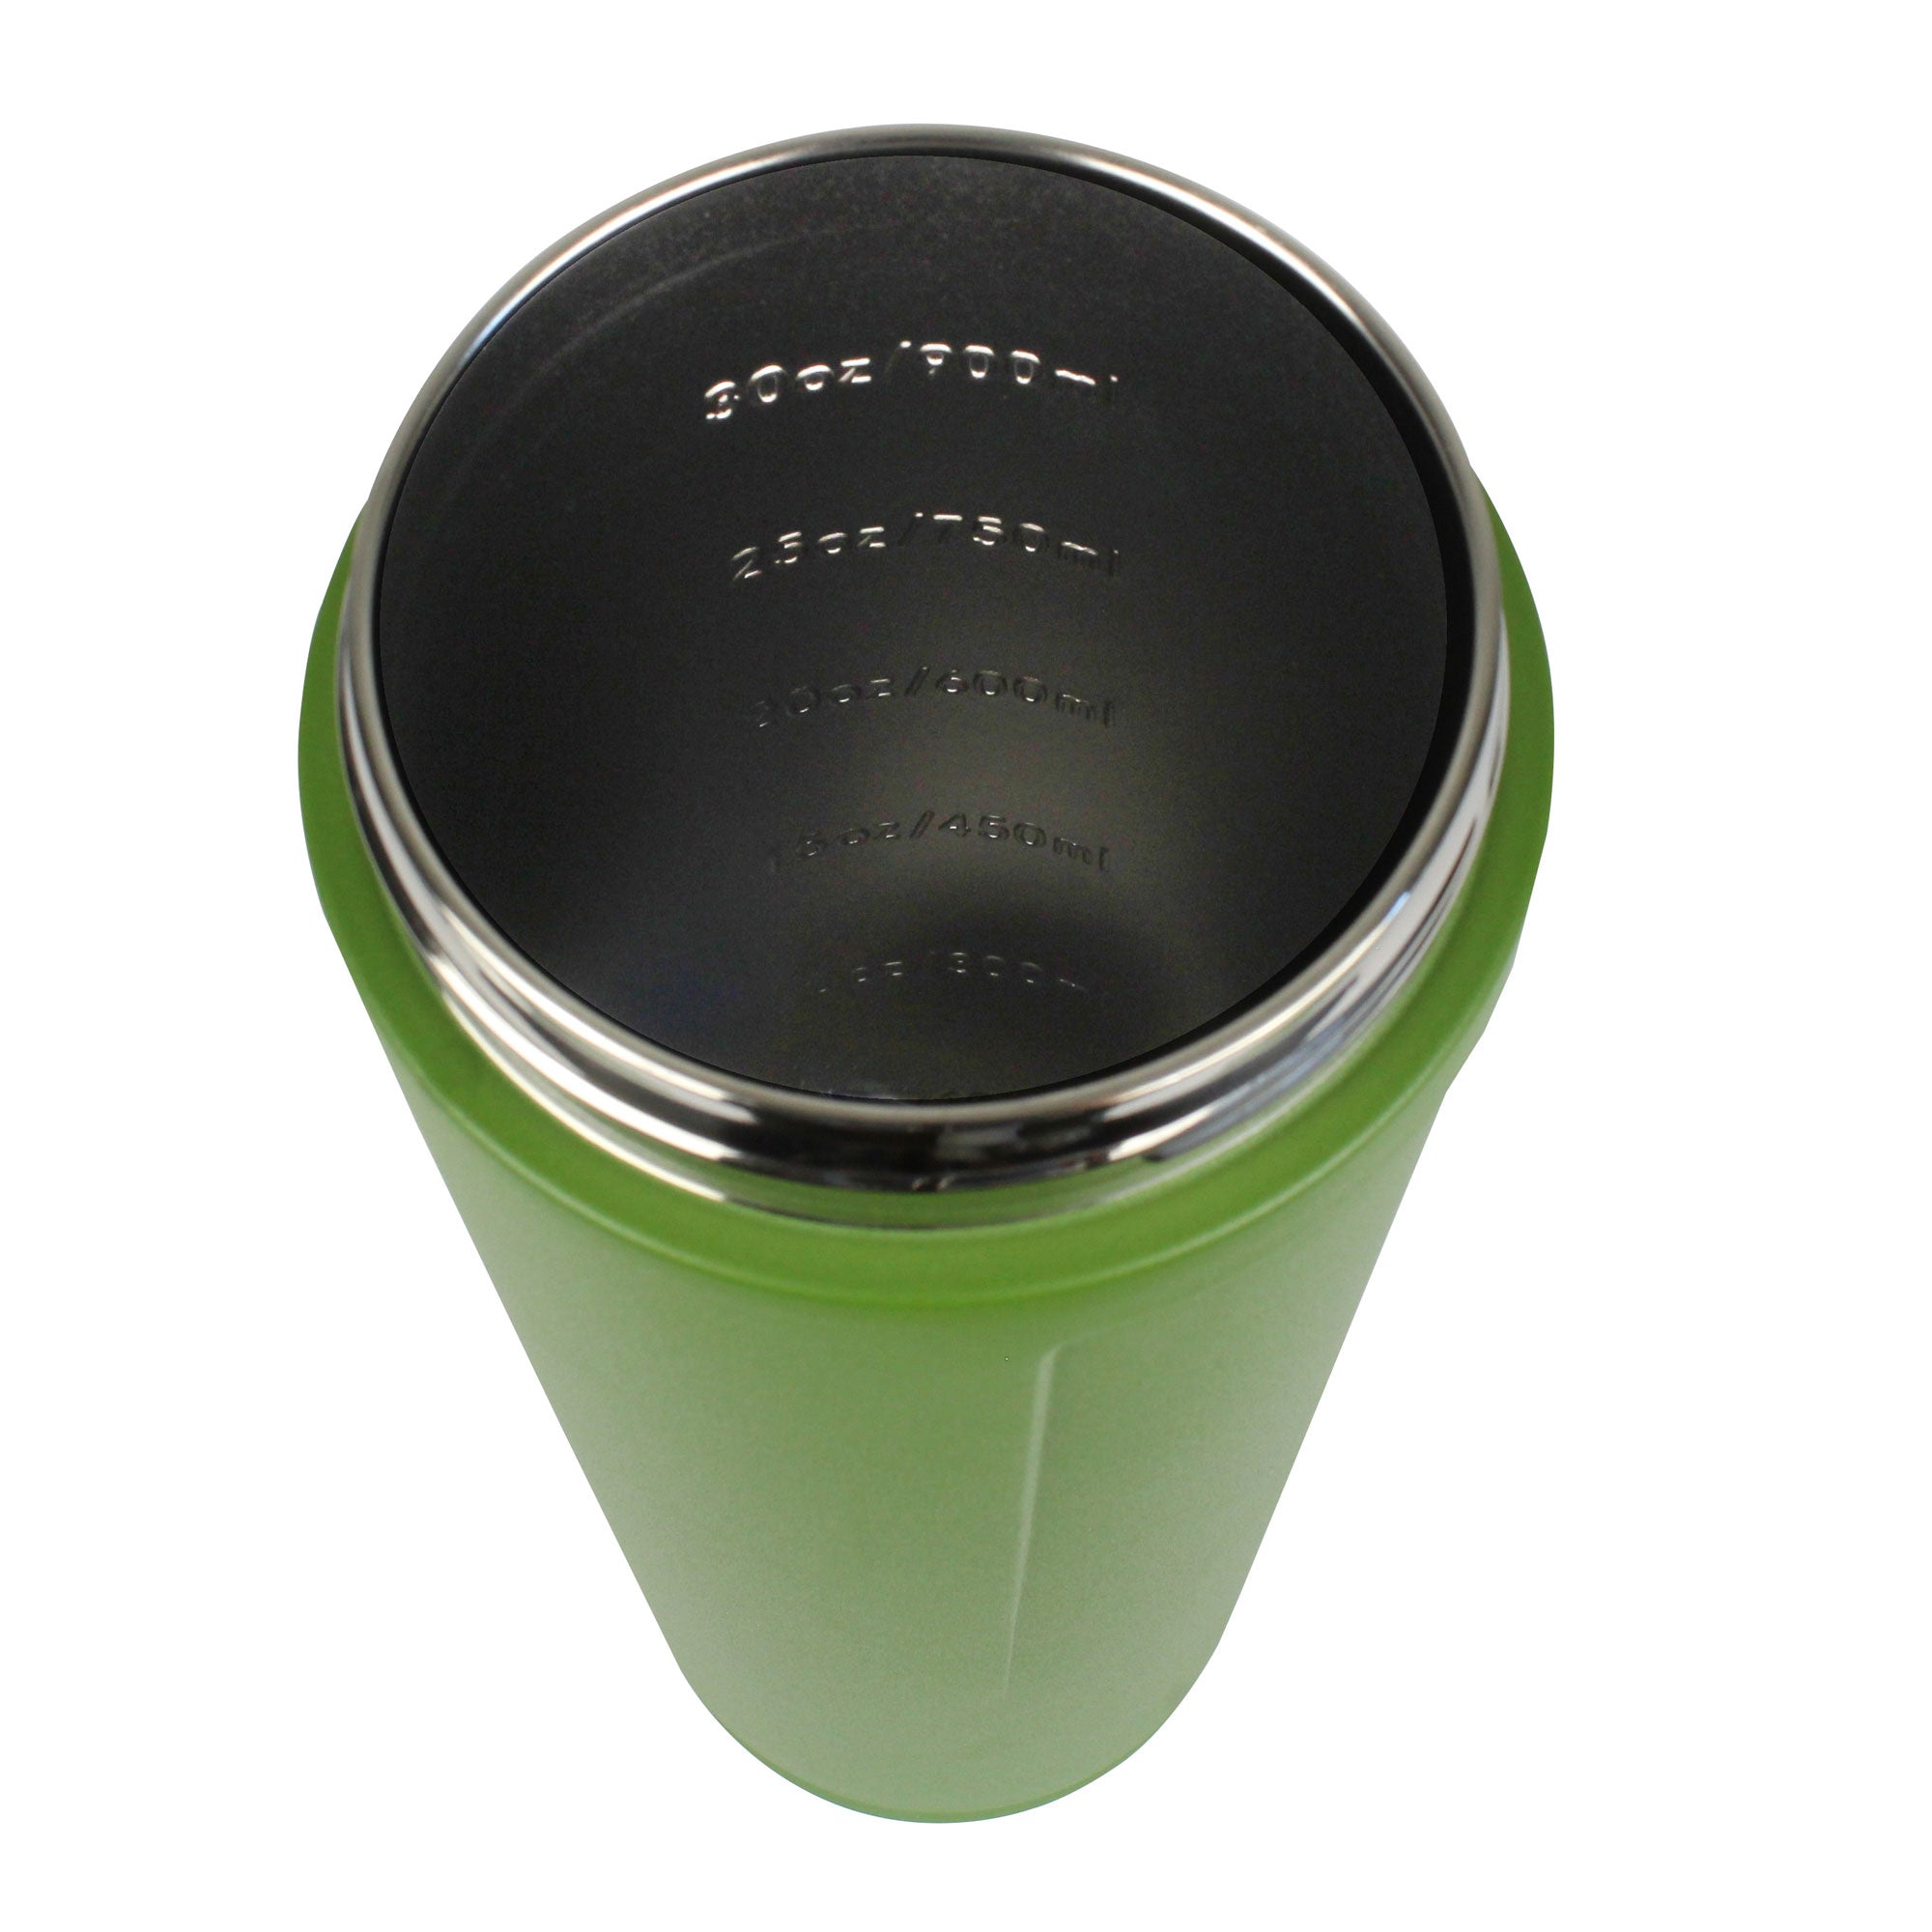 The Kitchen Custom 36oz Green Ice Shaker